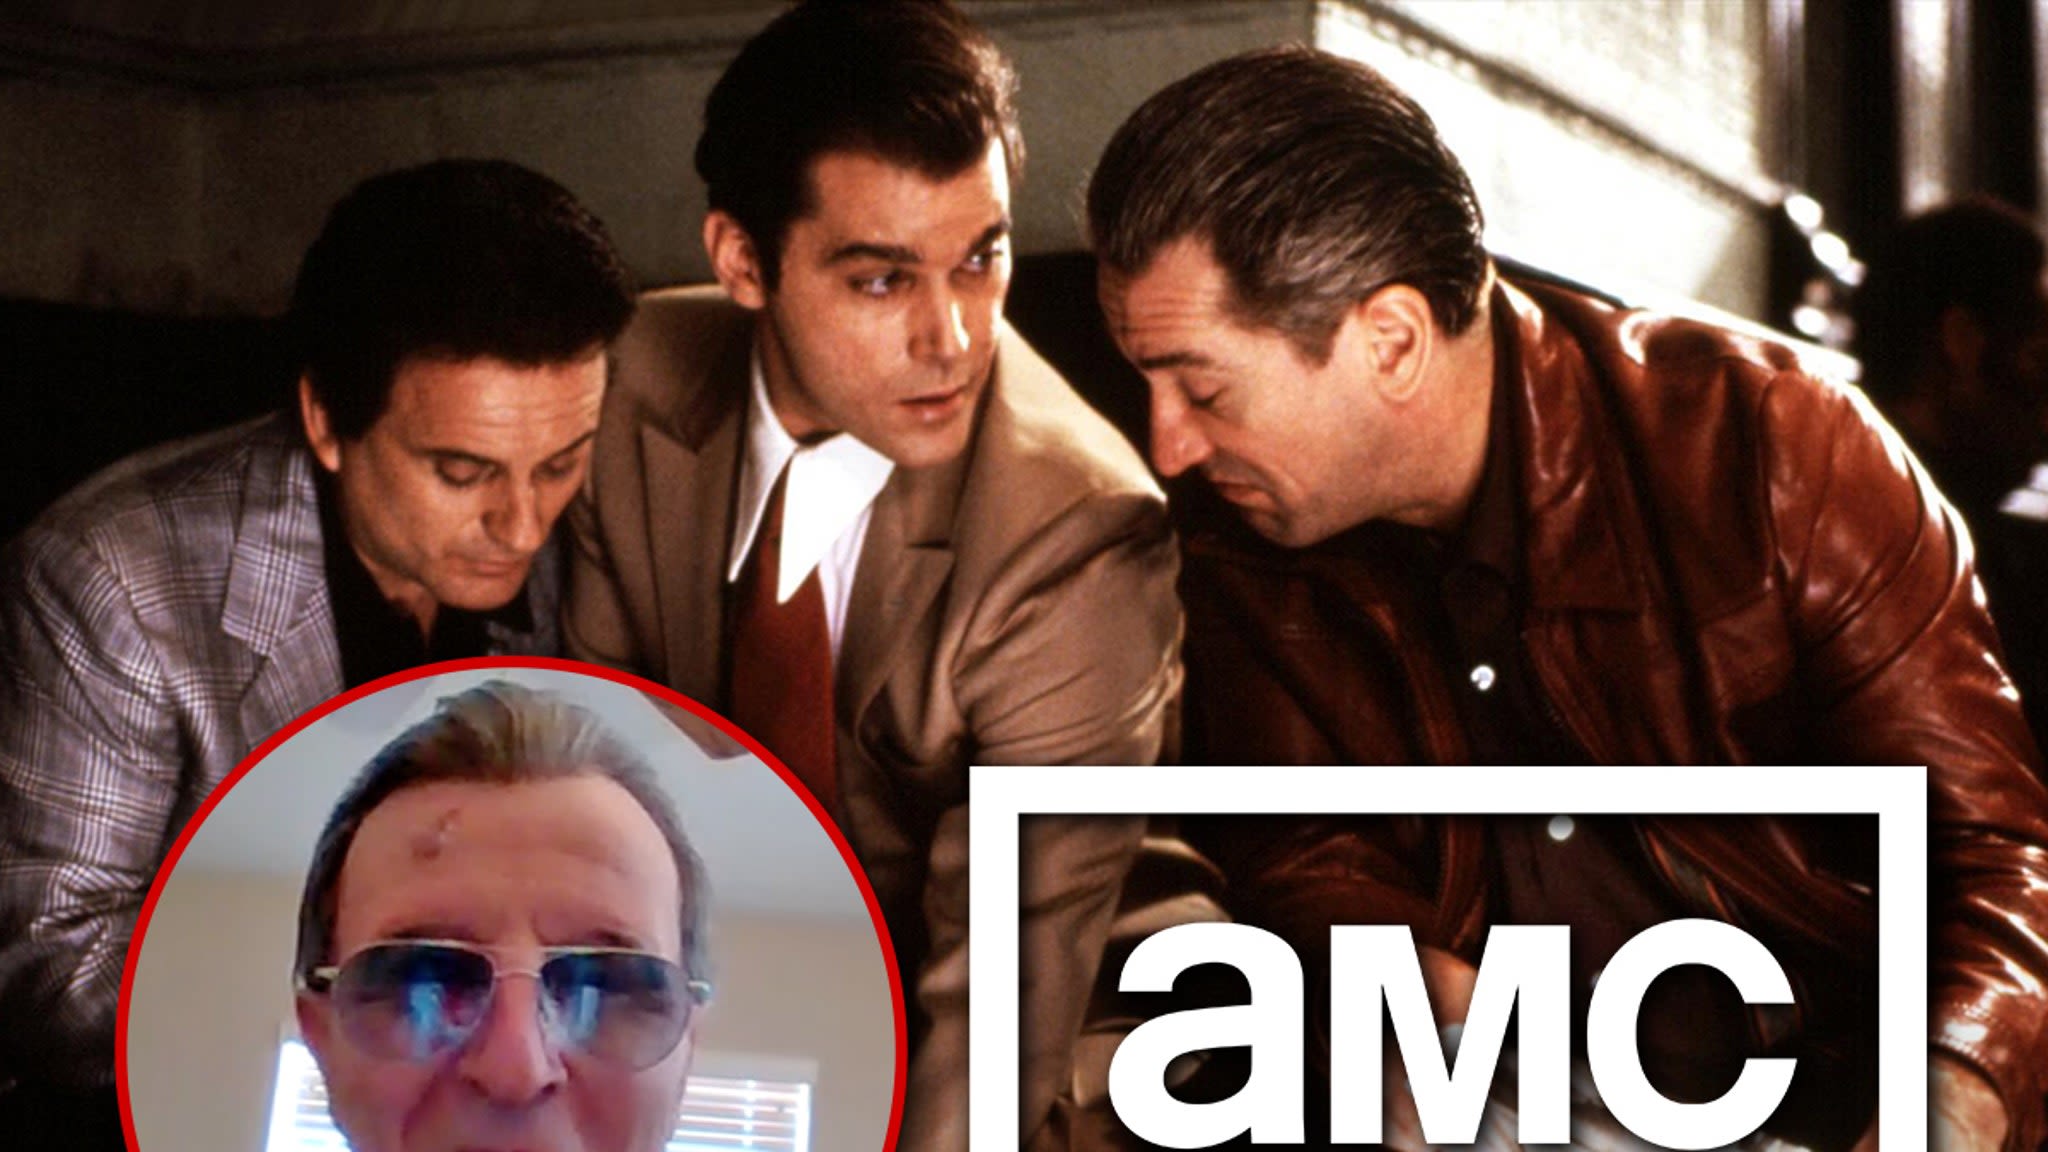 'Goodfellas' Actor Mad Over AMC Trigger Warning